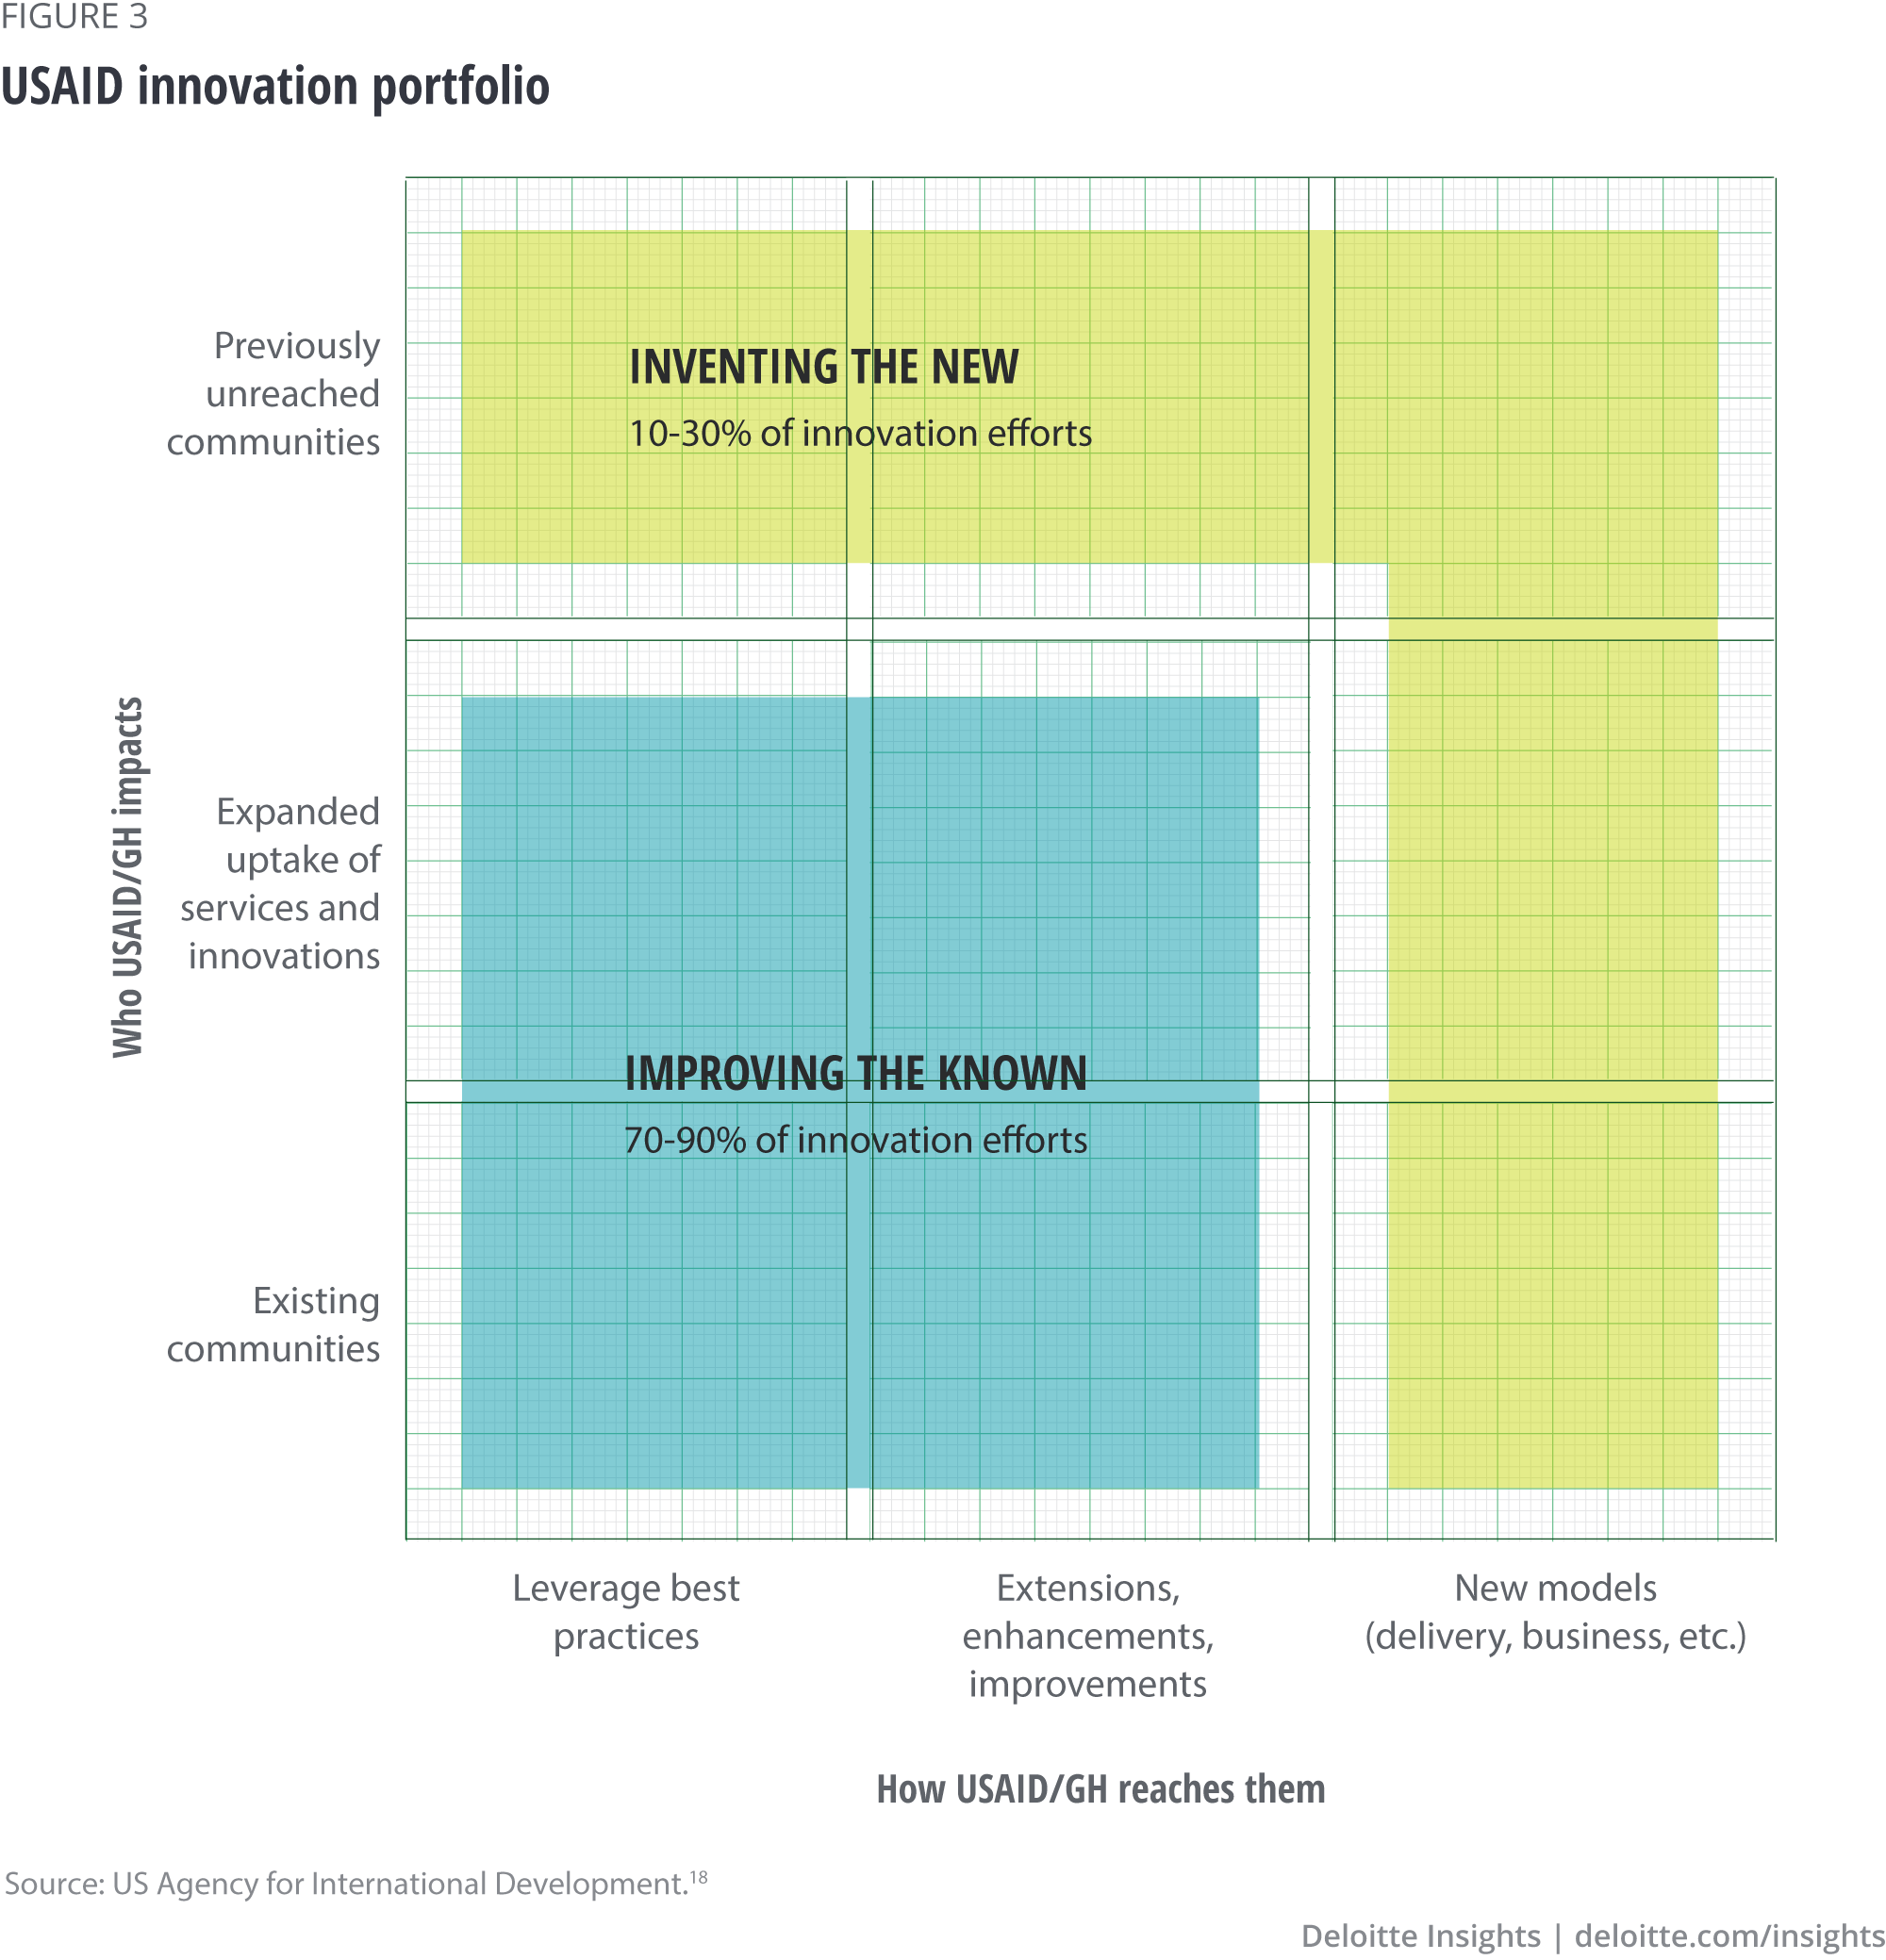 USAID innovation portfolio